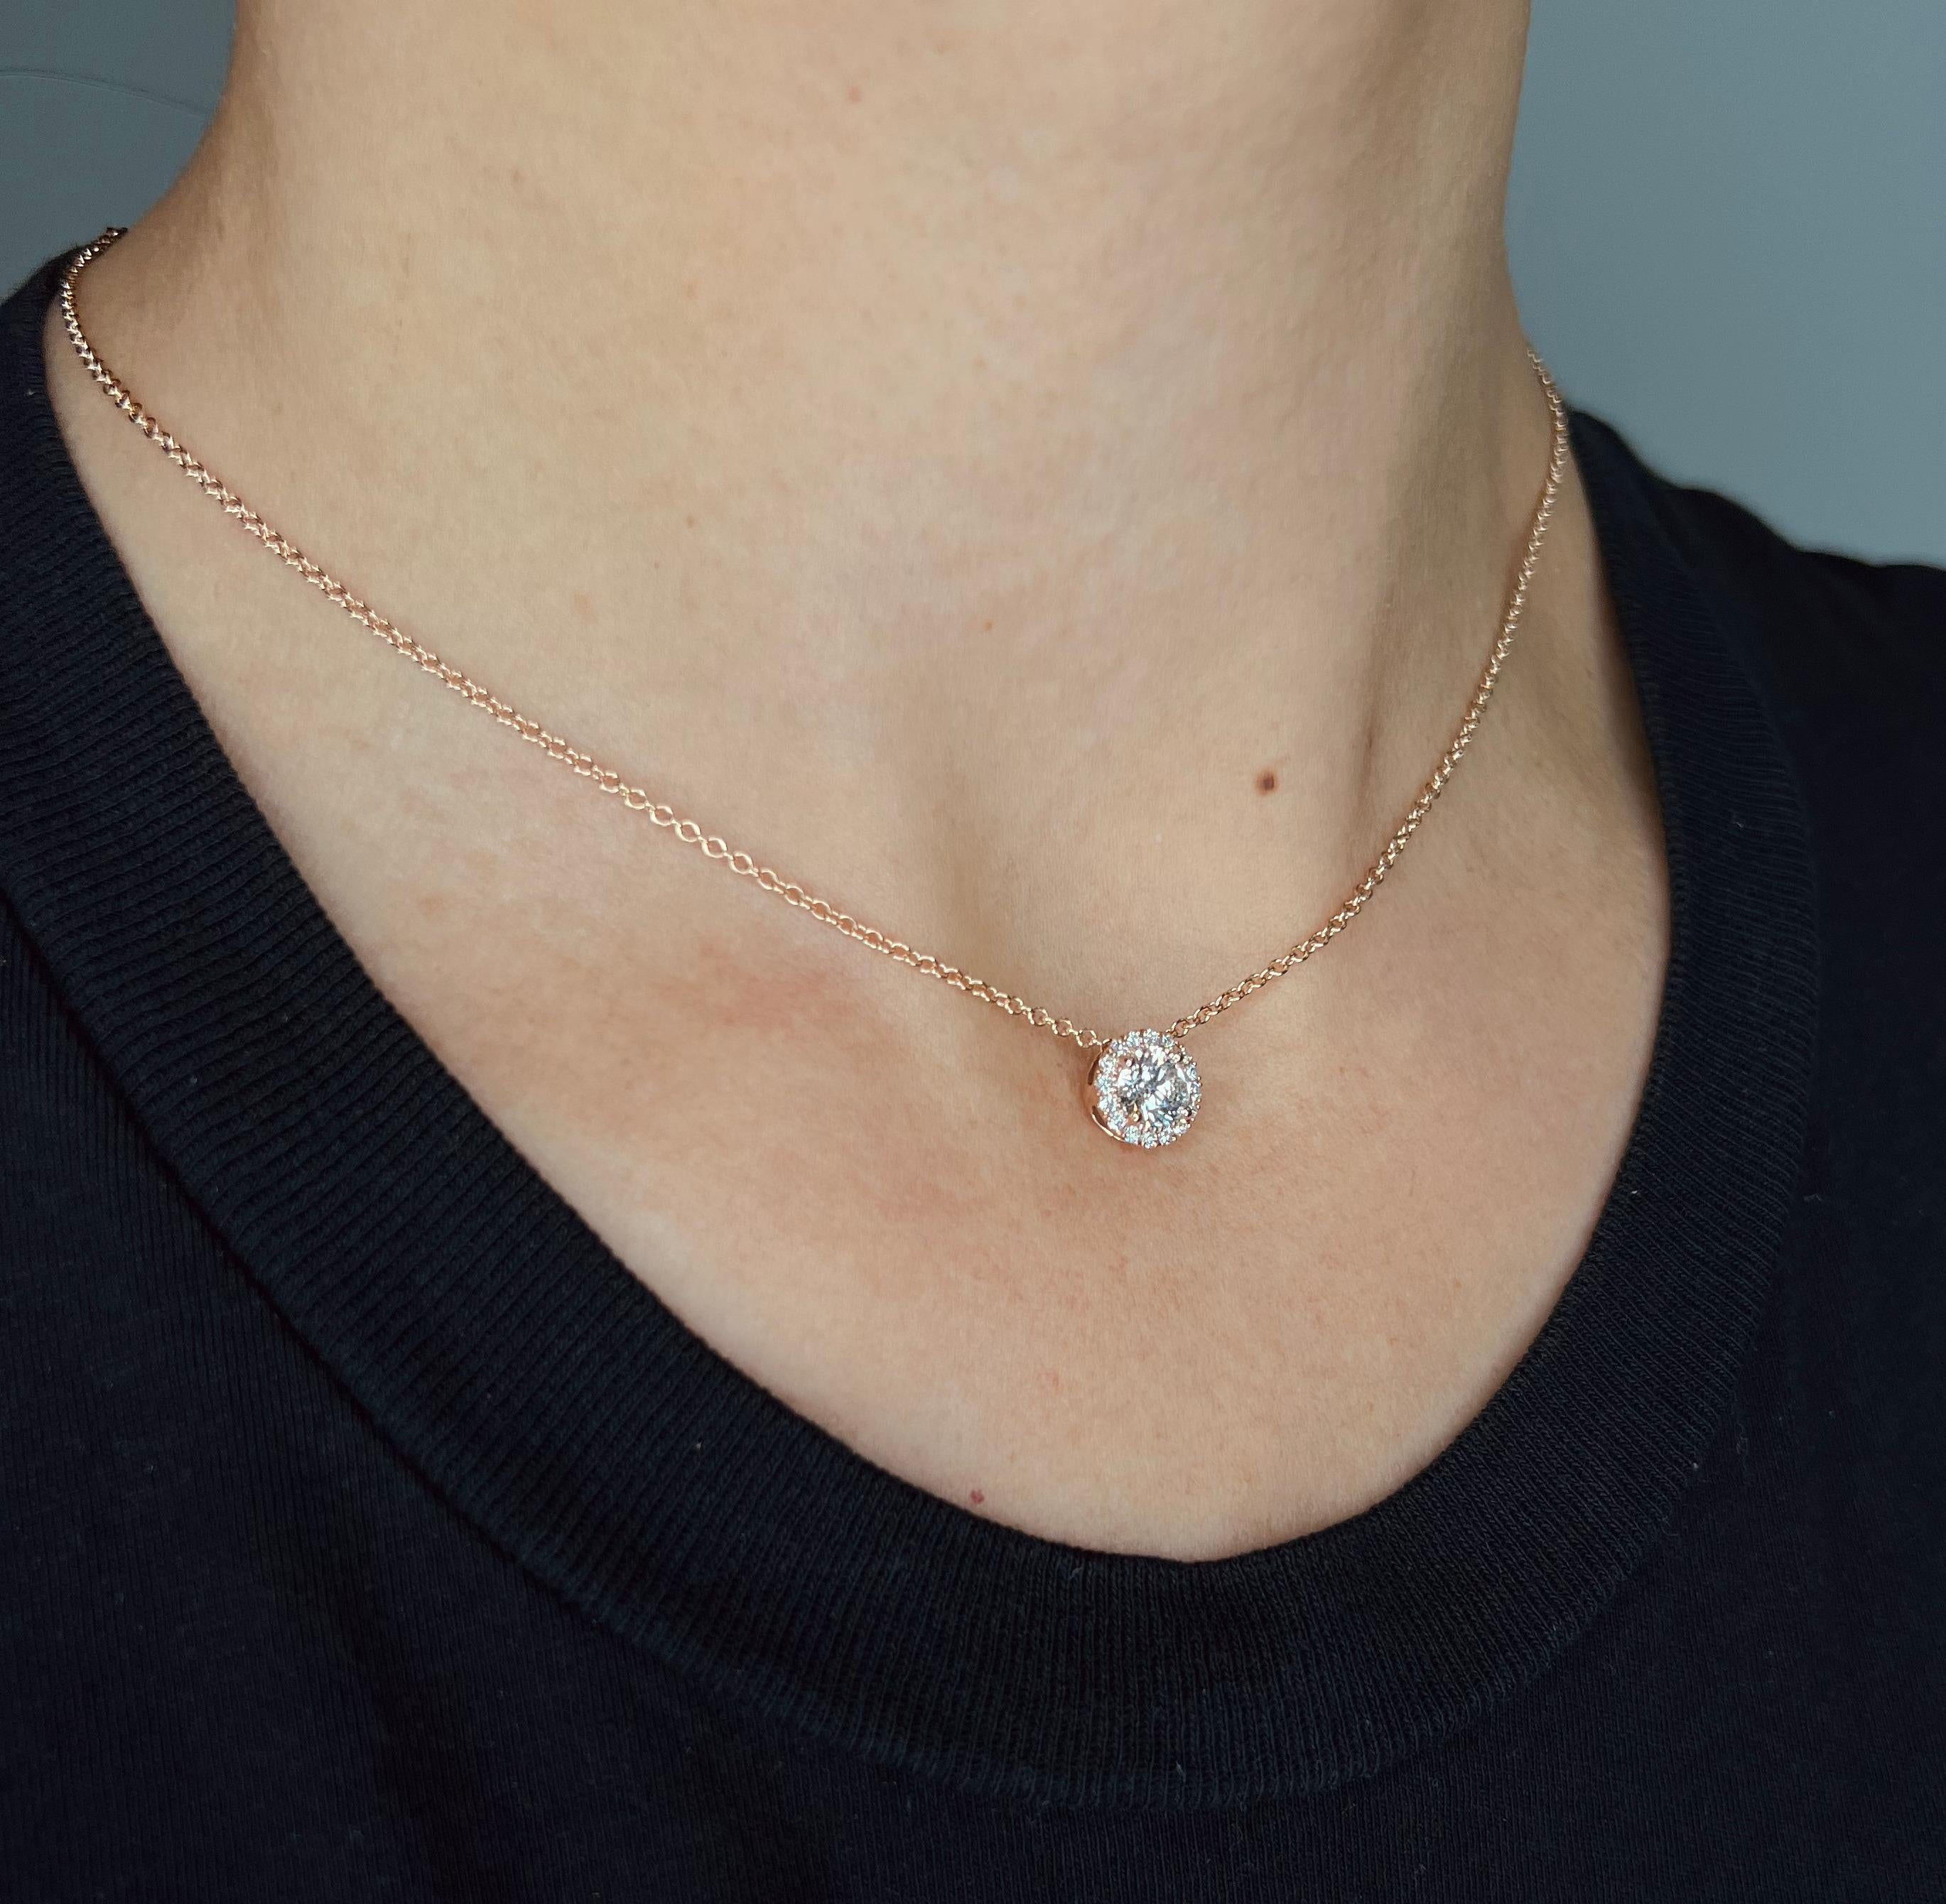 Women's or Men's 14k Rose Gold 0.65 Carat Round Cut Diamond Solitaire Pendant Necklace For Sale